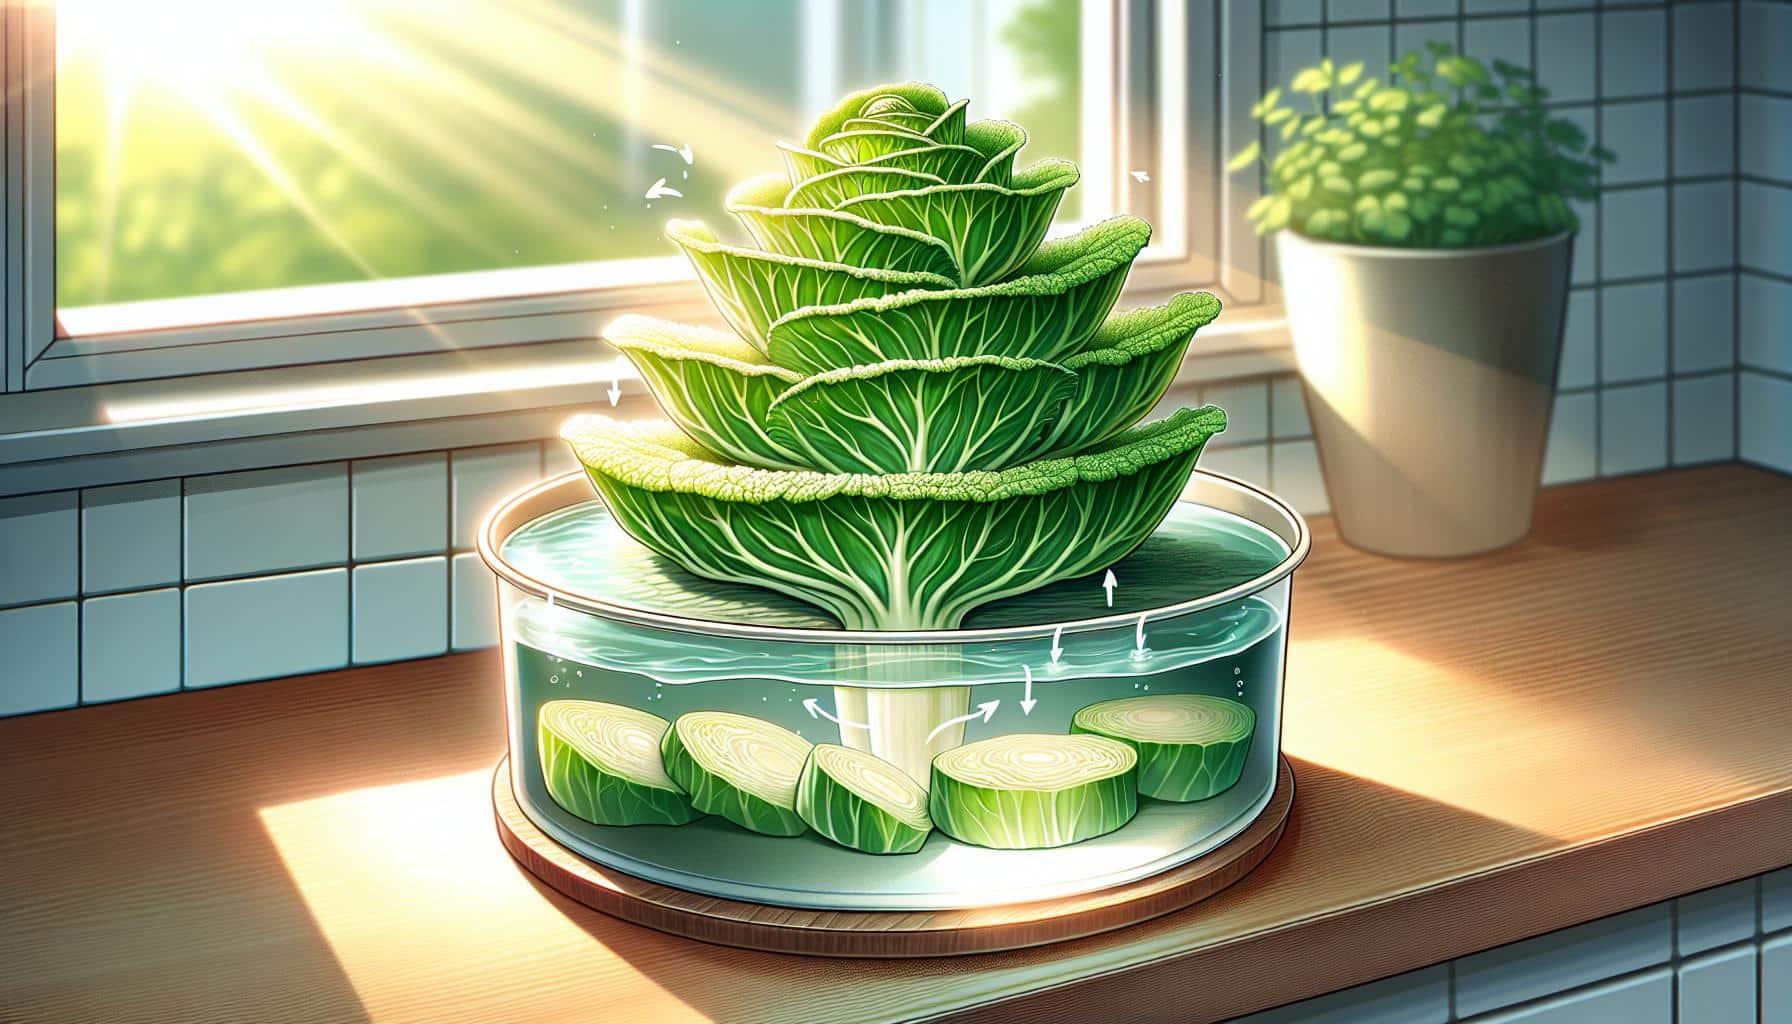 sunny kitchen window cabbage art